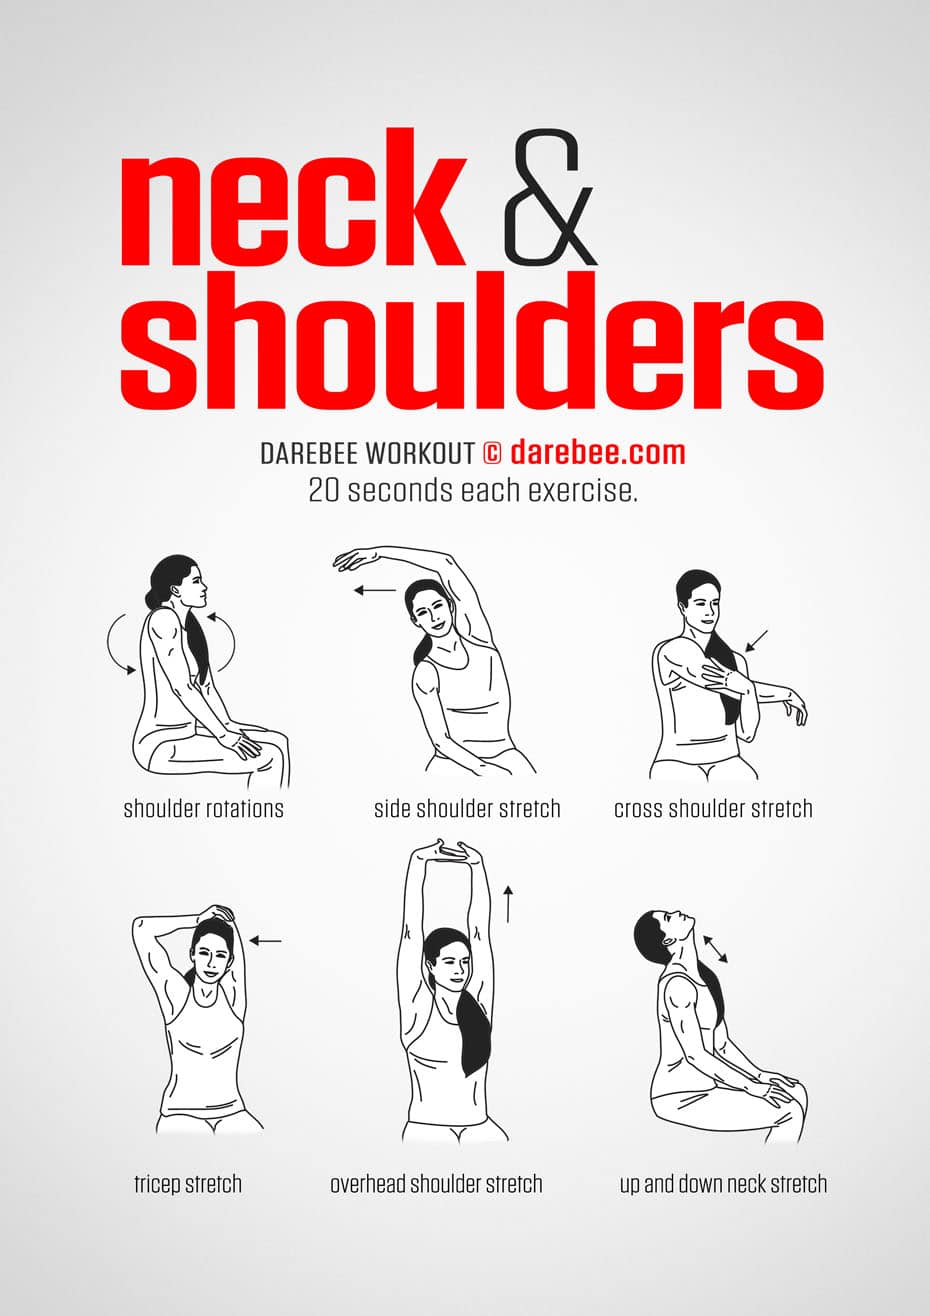 https://www.backtobasicschiropractic.com.au/wp-content/uploads/2020/04/neck-and-shoulders-workout.jpg